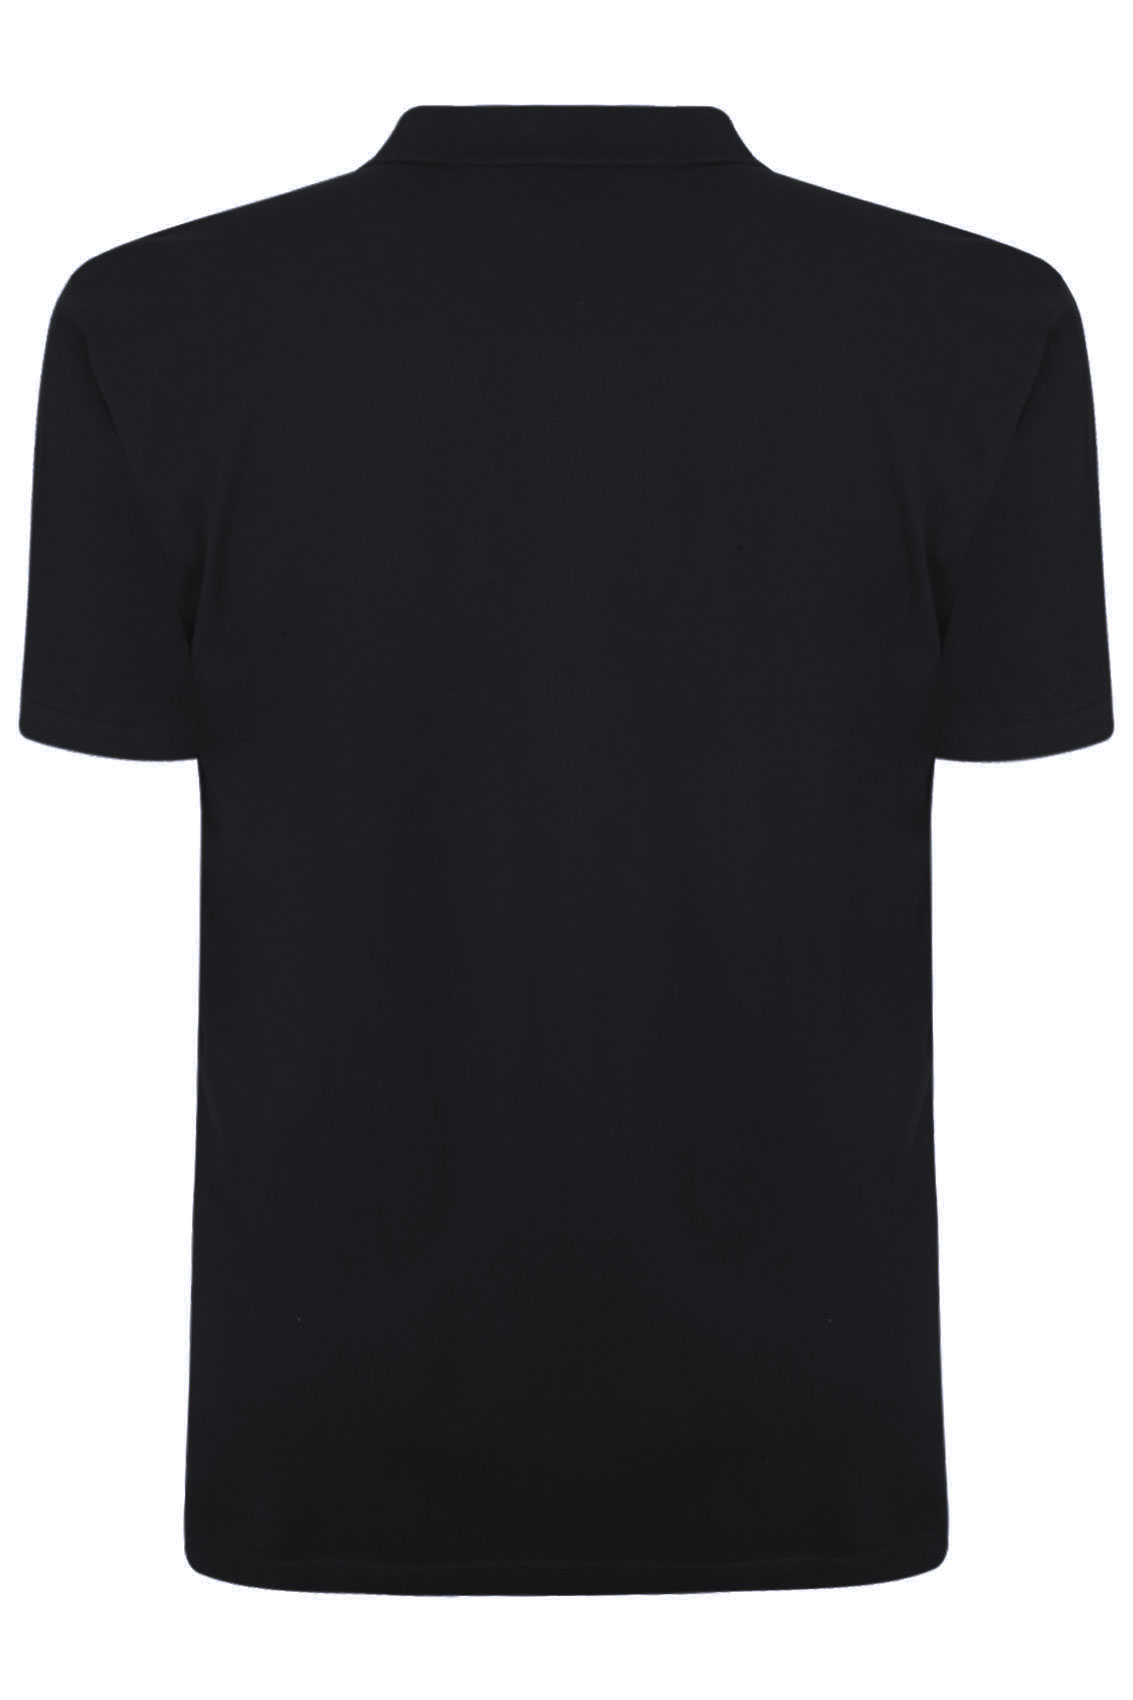 BadRhino Black Plain Polo Shirt With Chest Pocket Extra ...